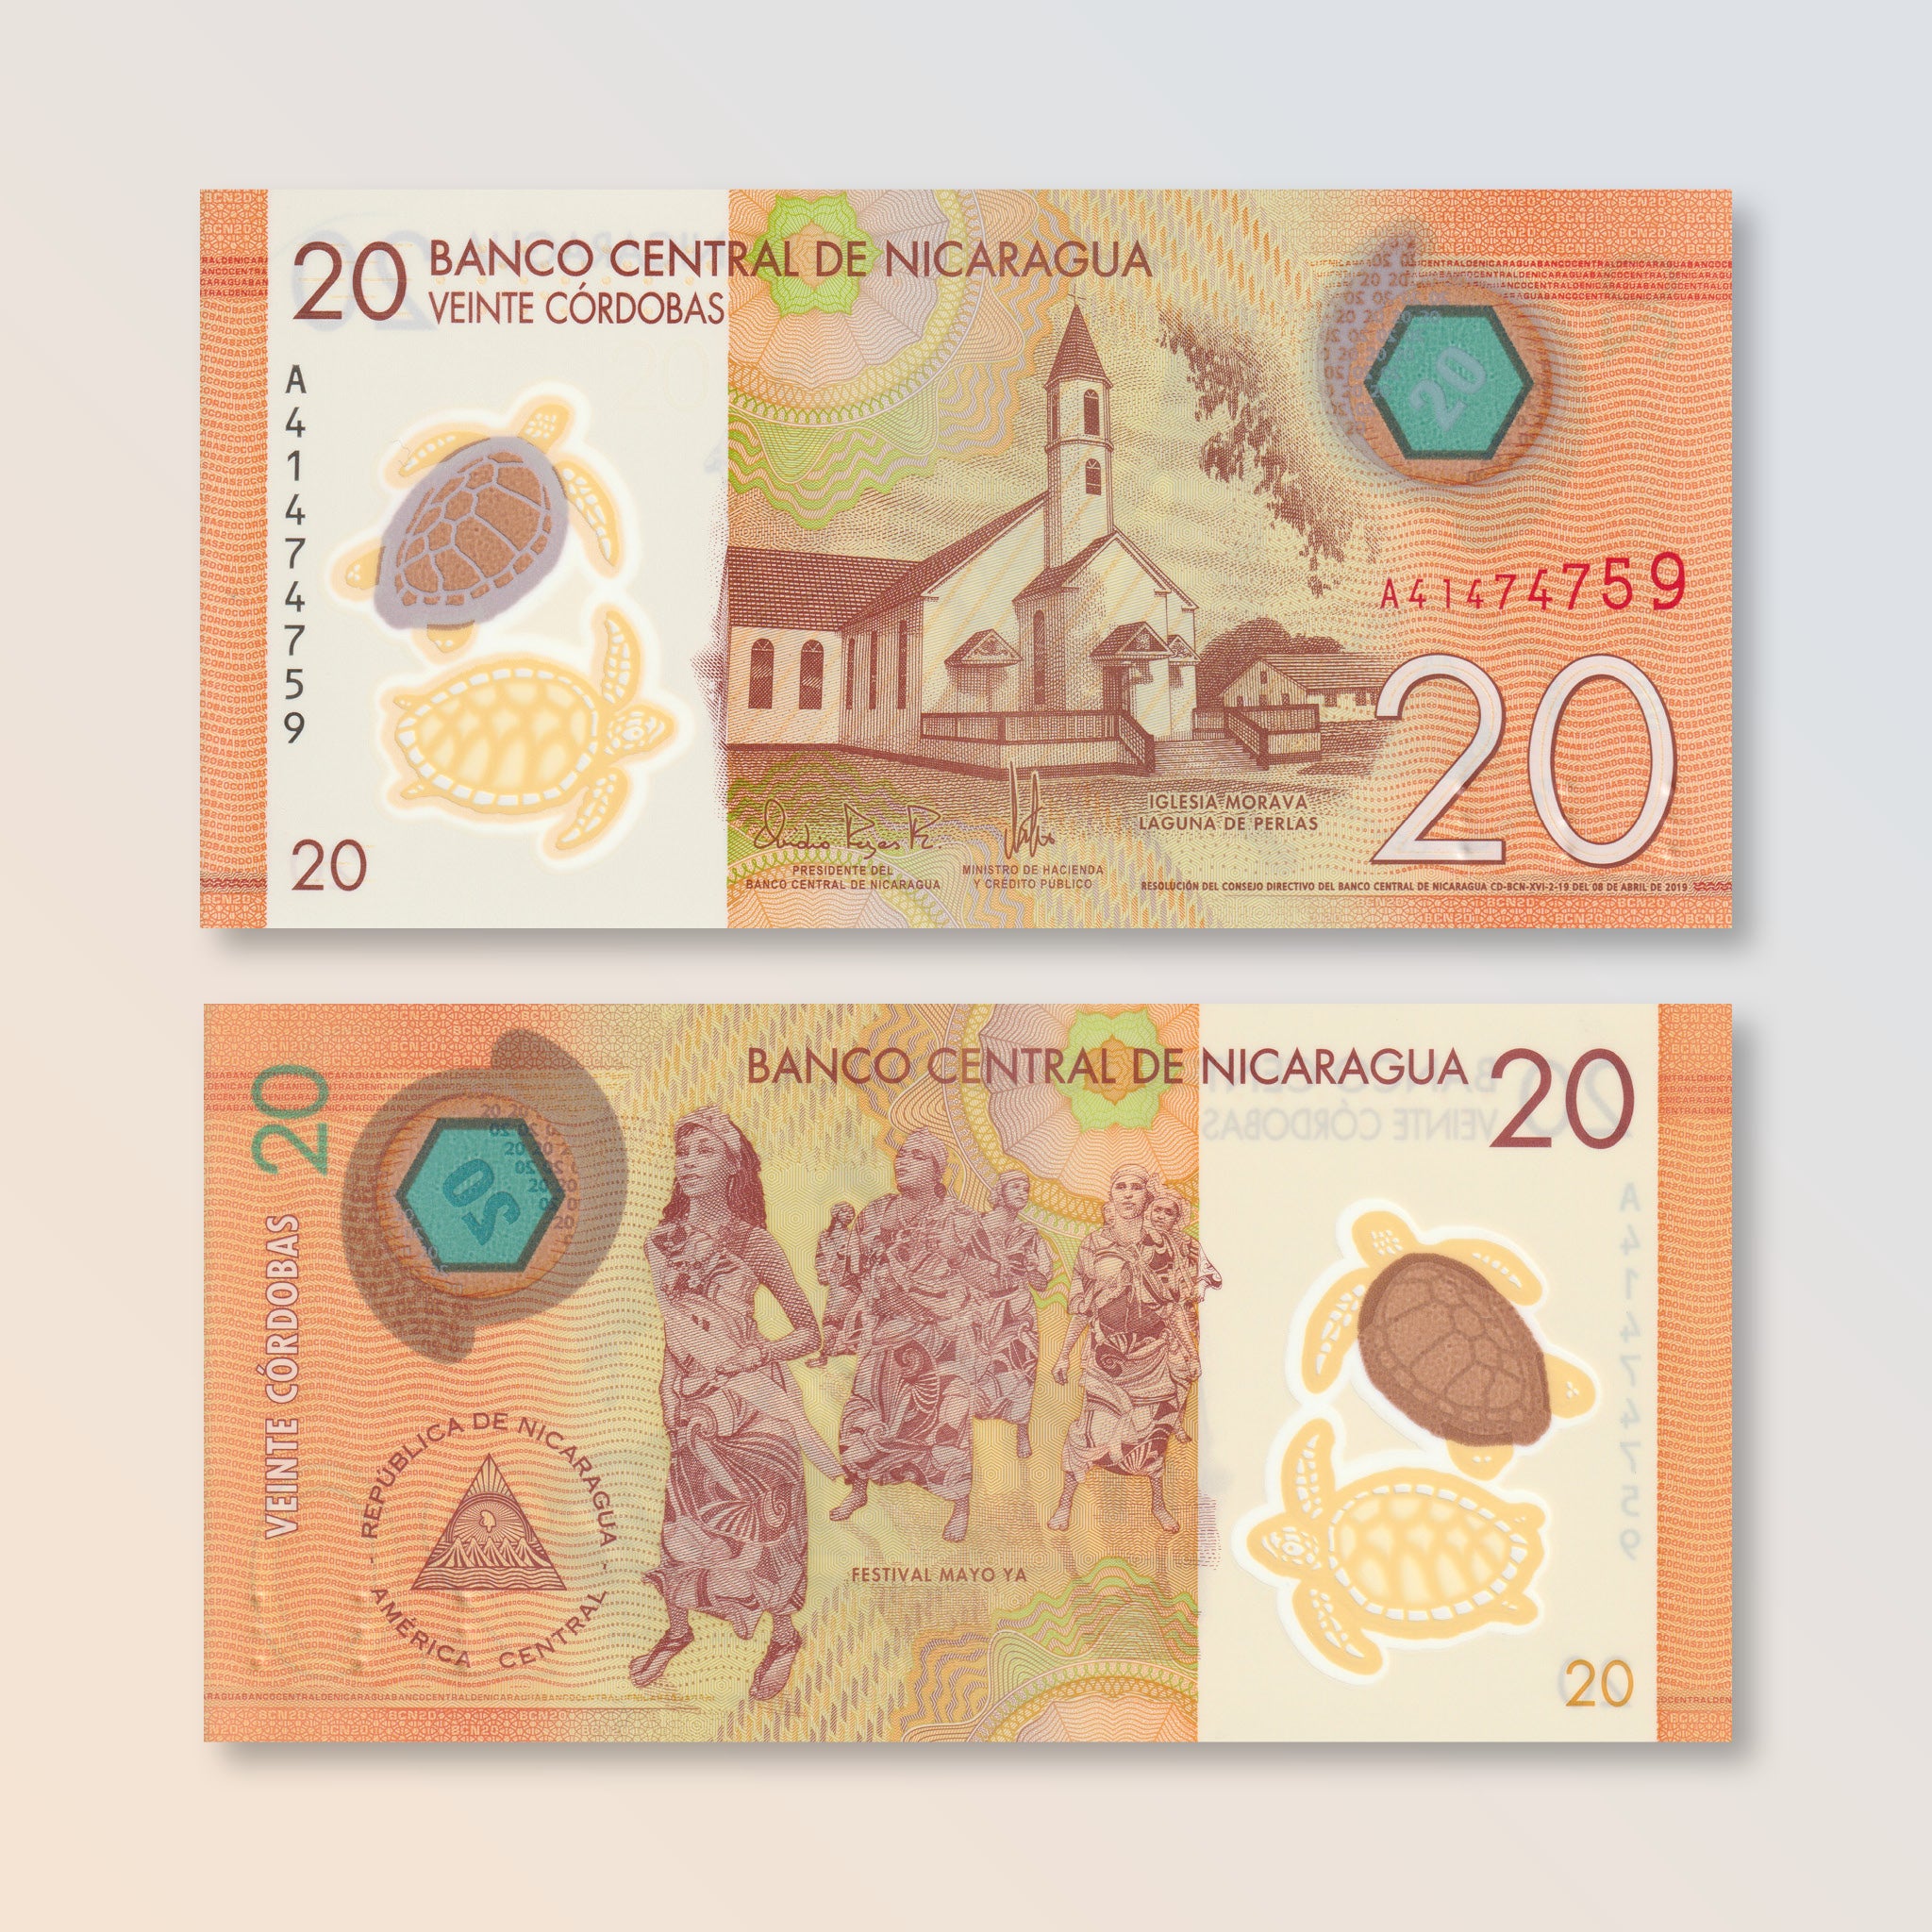 Nicaragua 20 Córdobas, 2019, B507b, P210, UNC - Robert's World Money - World Banknotes